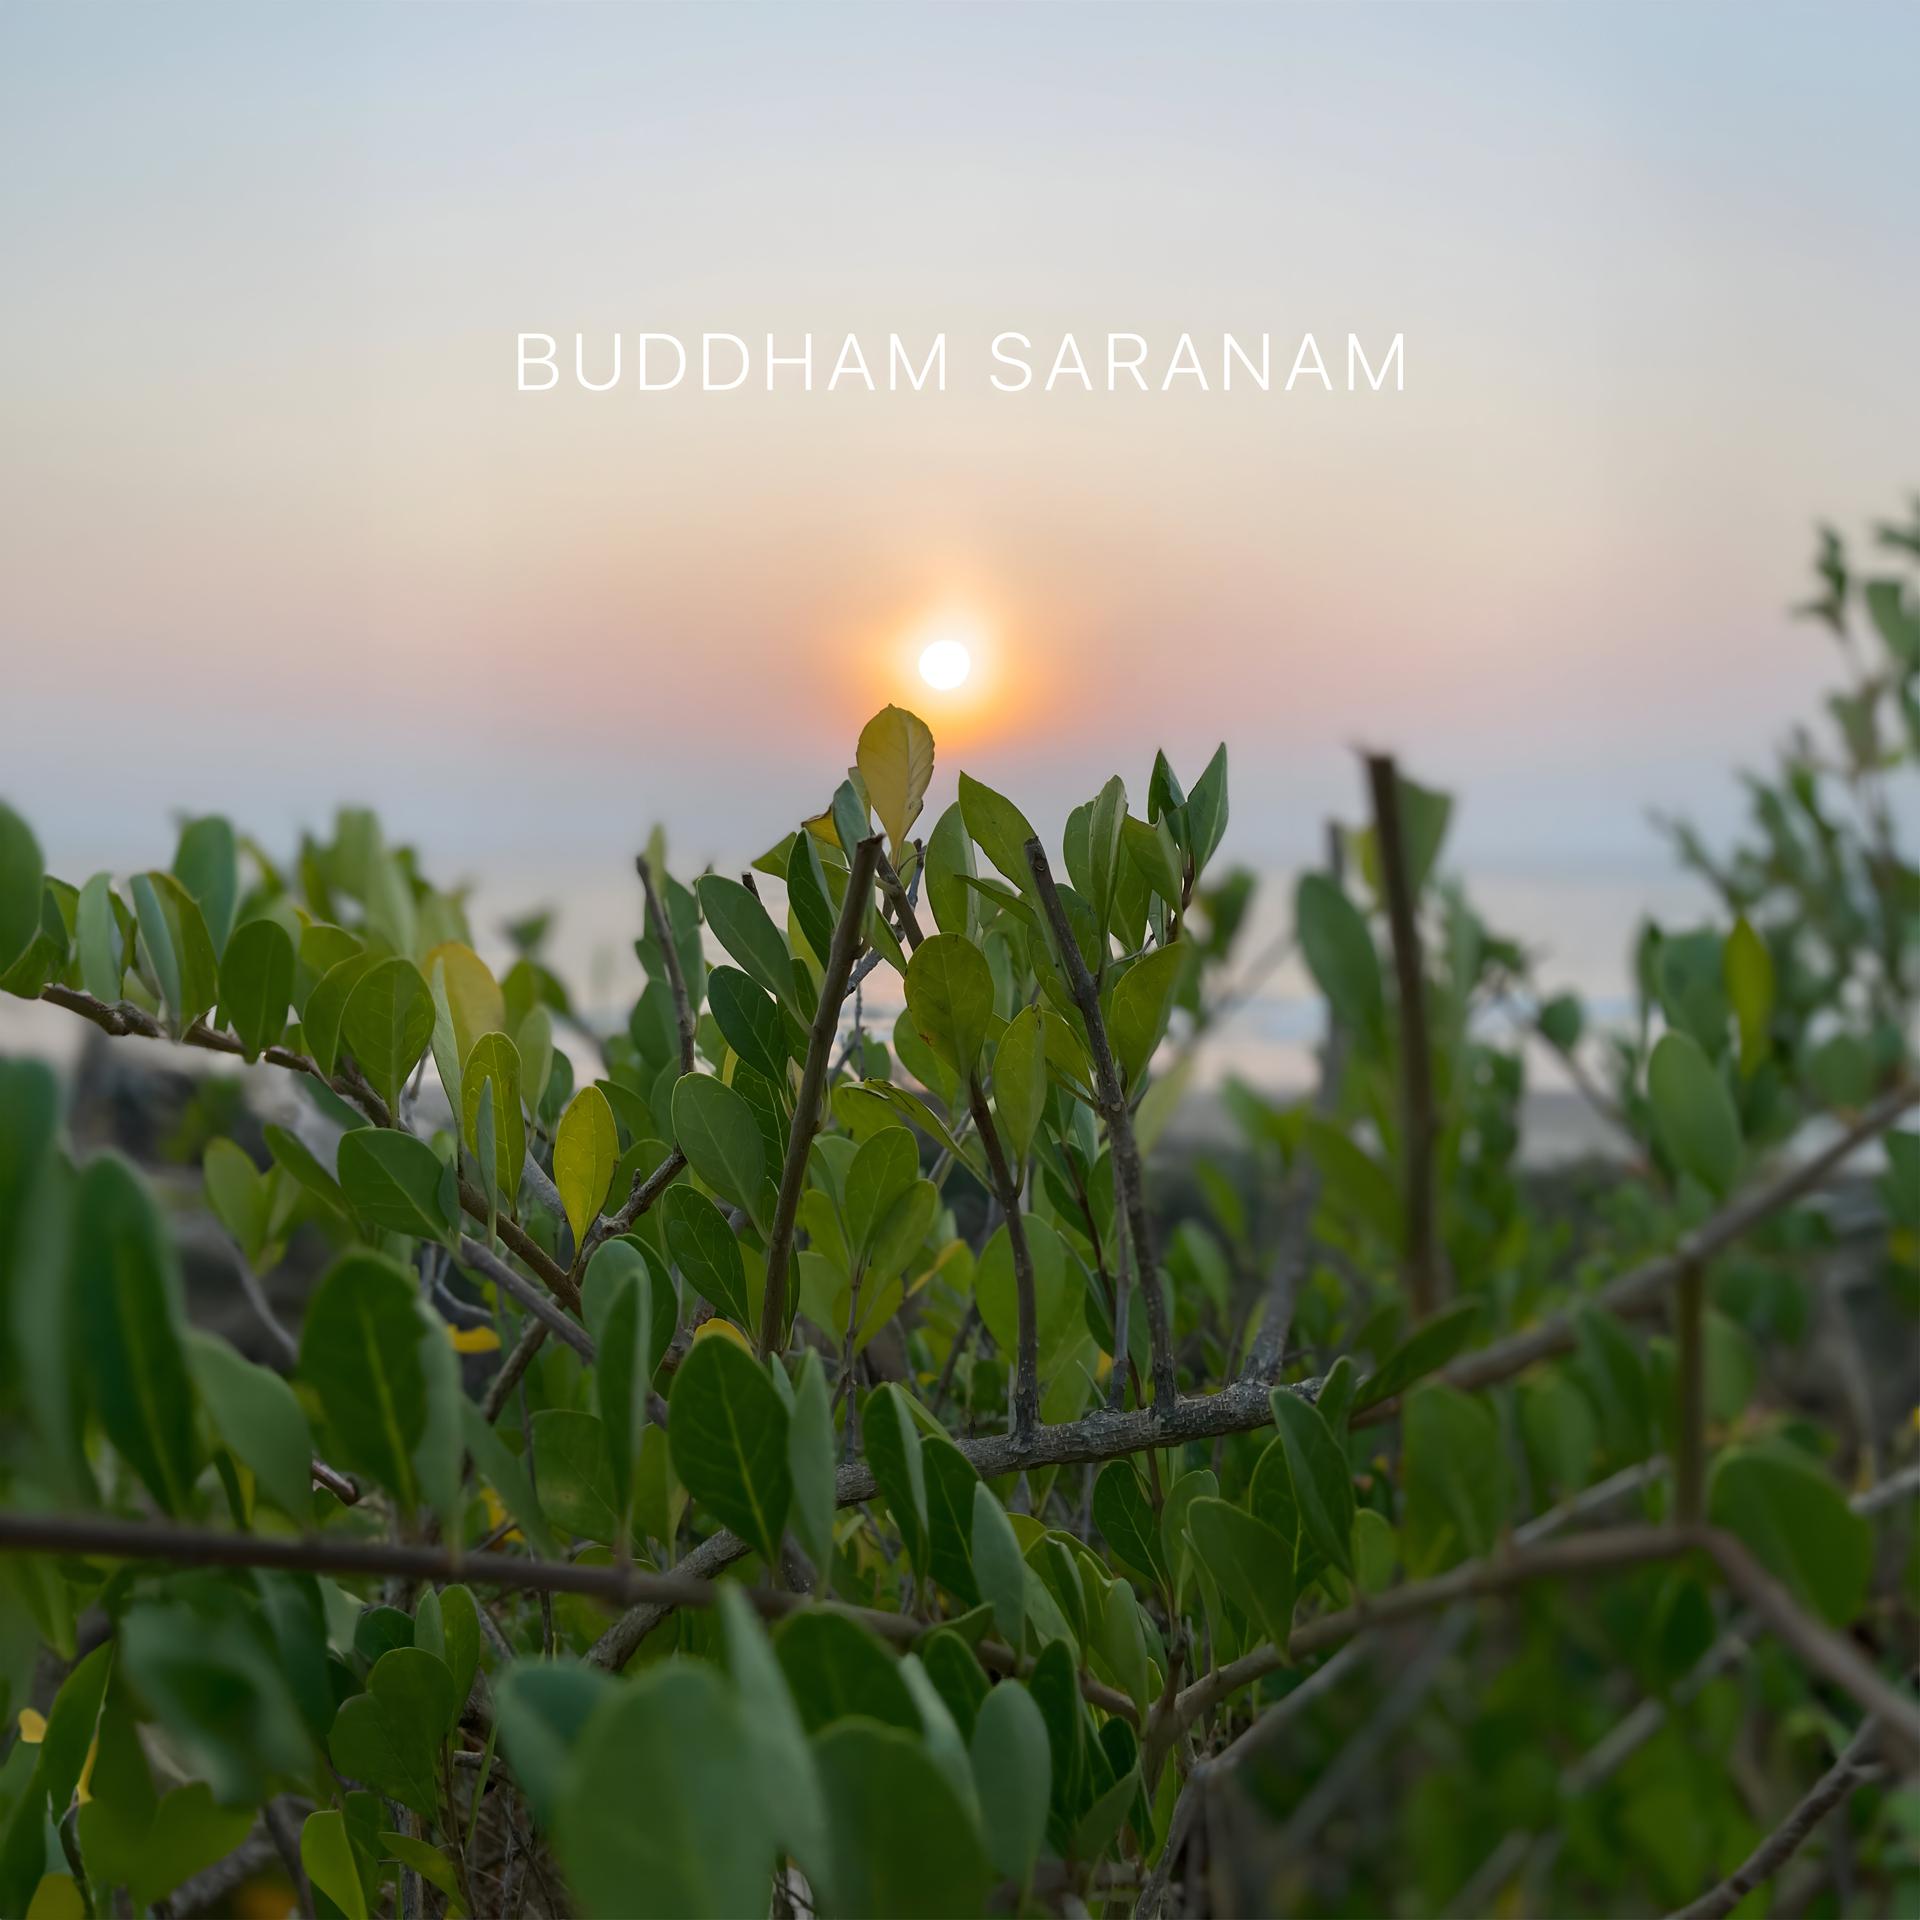 Постер альбома Buddham Saranam Gachhami